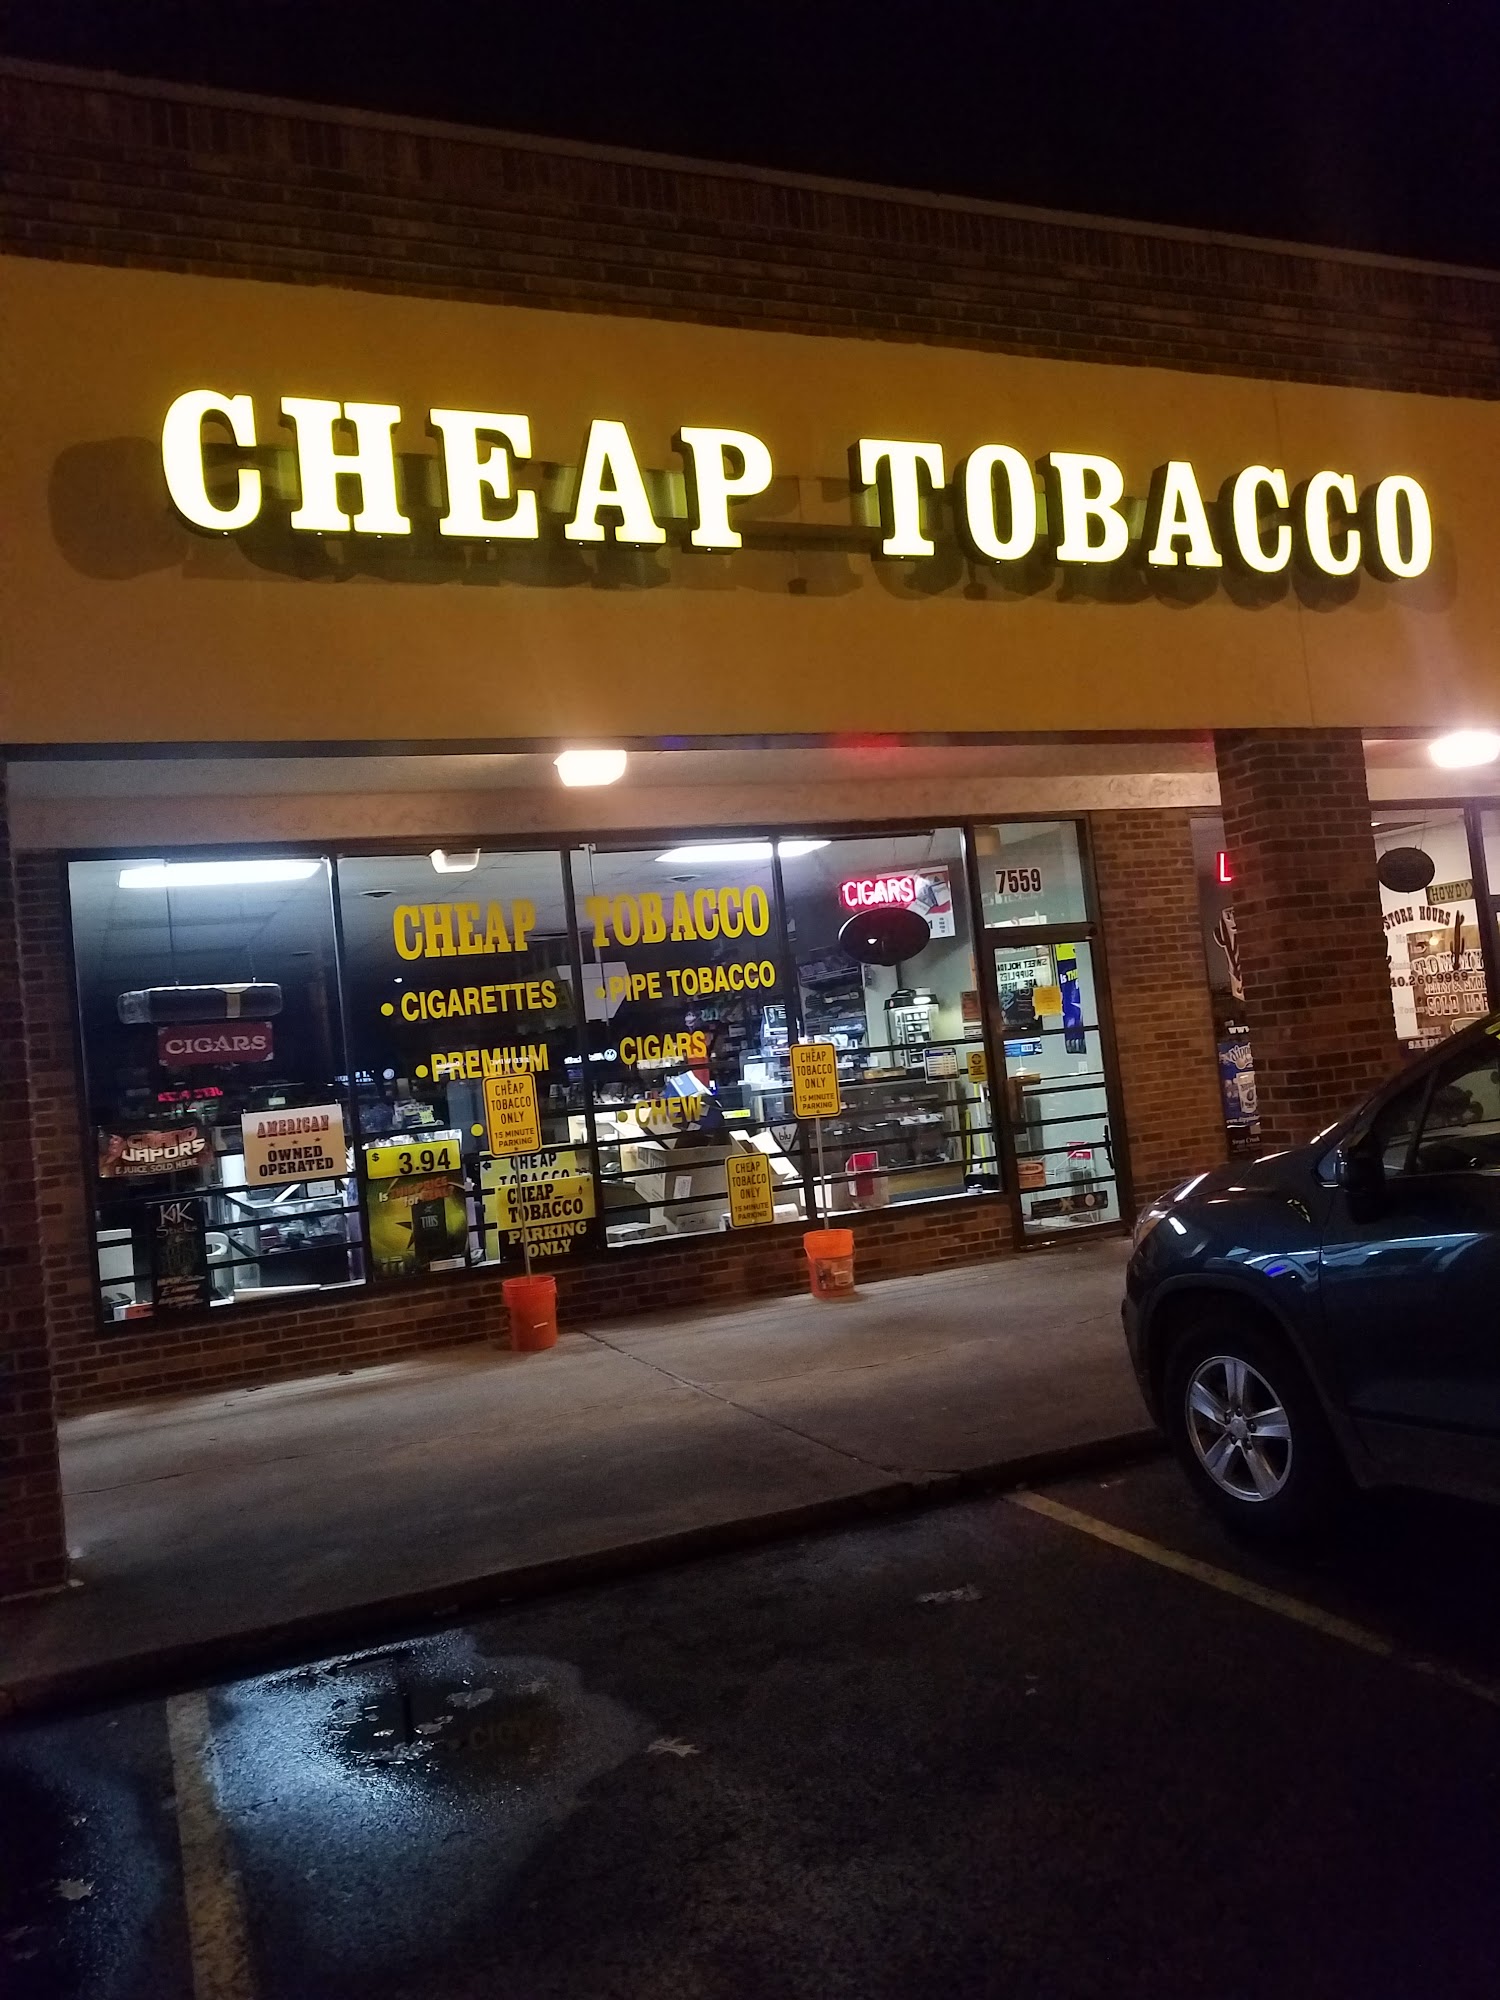 Cheap Tobacco